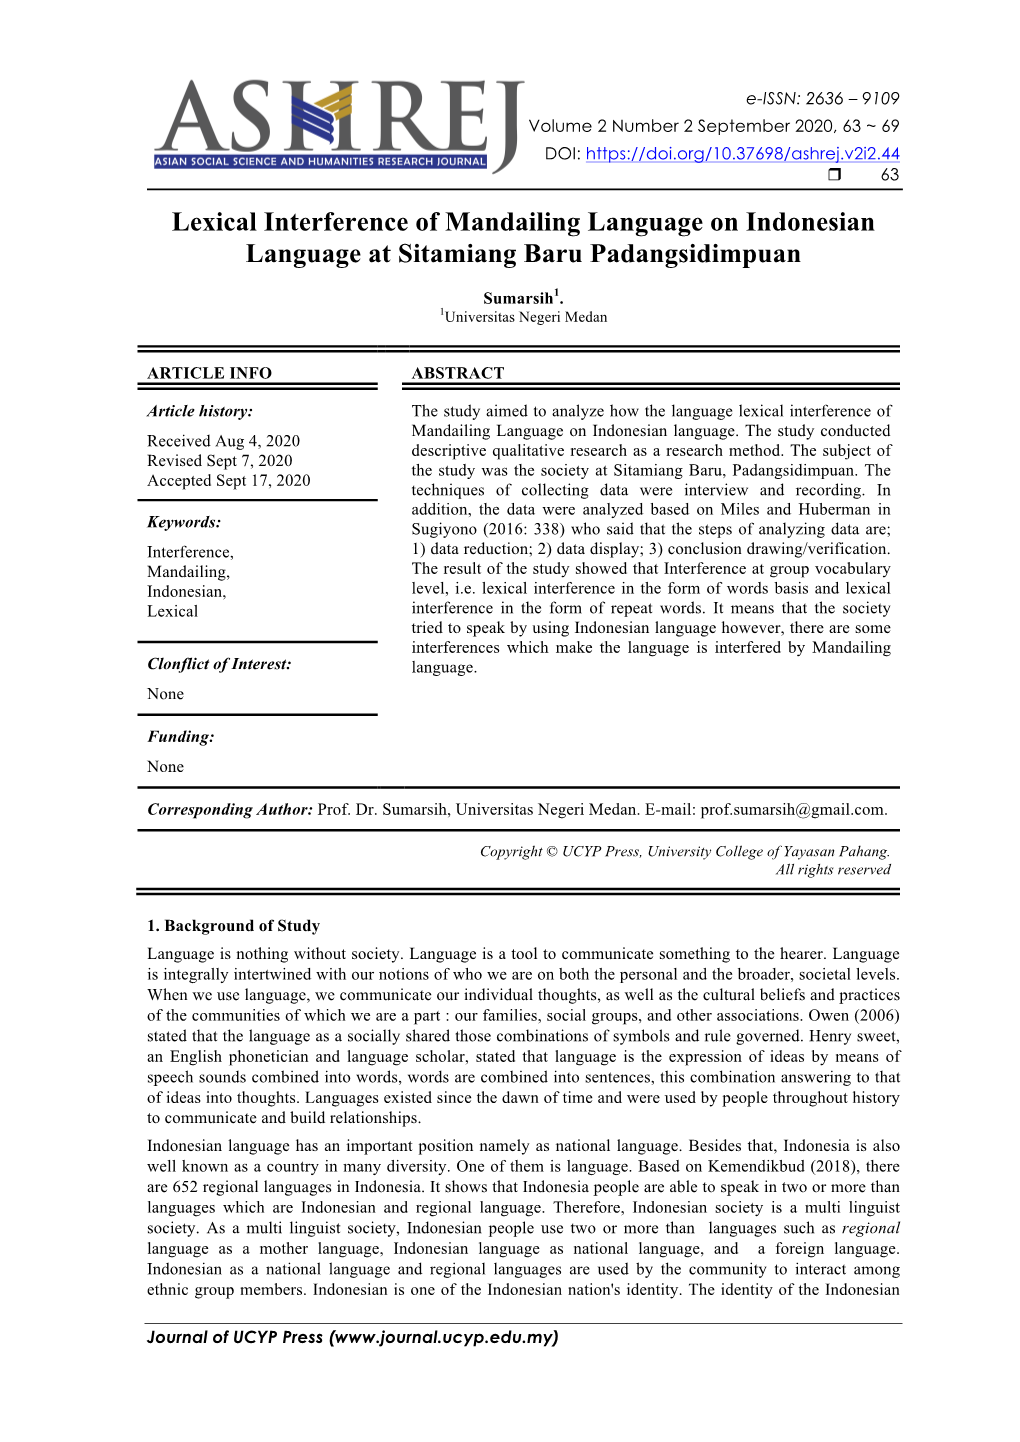 Lexical Interference of Mandailing Language on Indonesian Language at Sitamiang Baru Padangsidimpuan